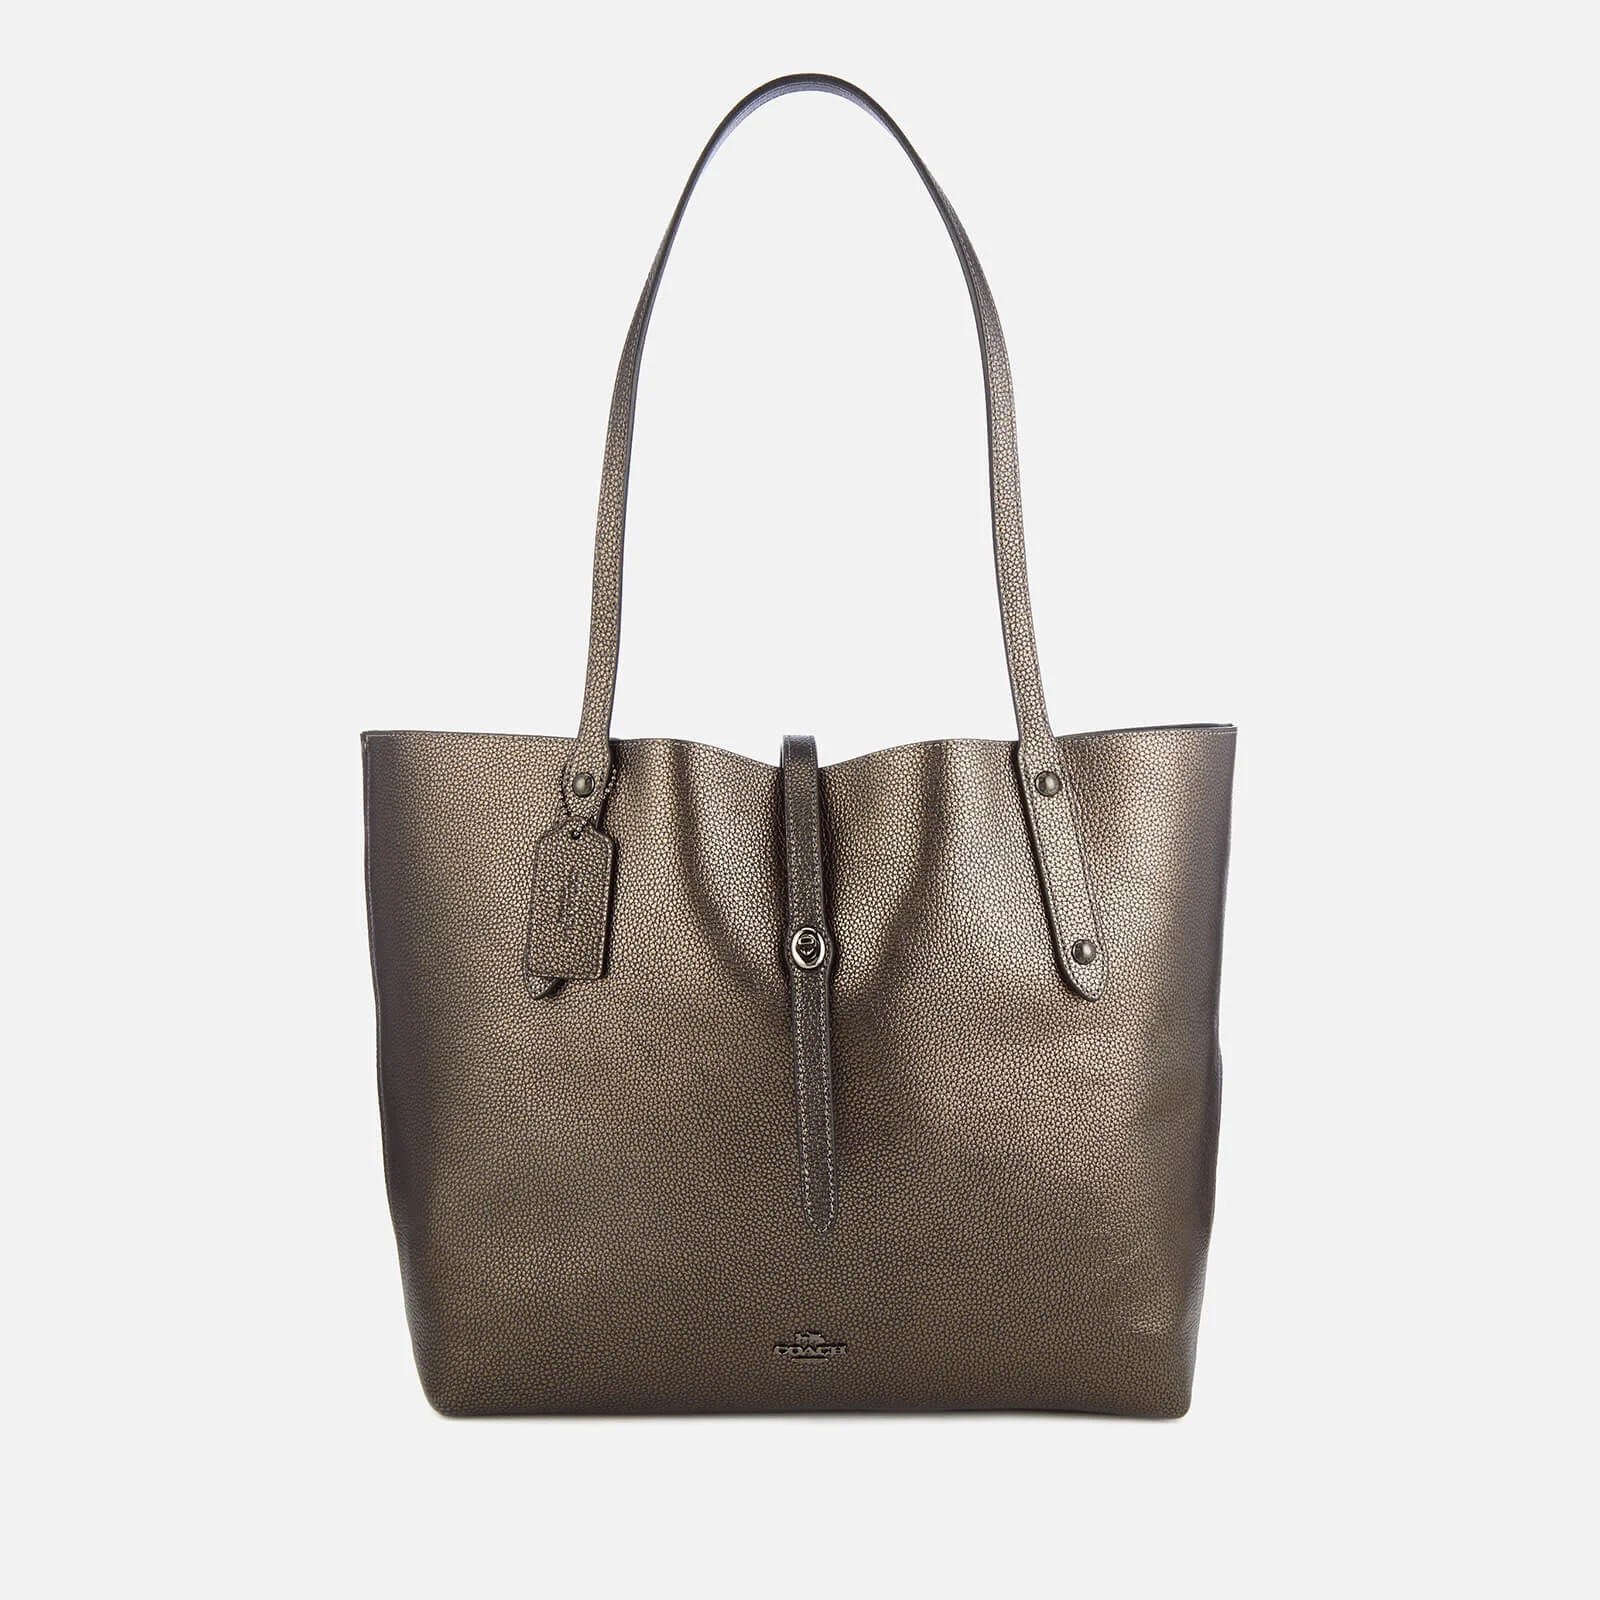 Coach Women's Metallic Leather Market Tote Bag - Metallic Graphite Image 1